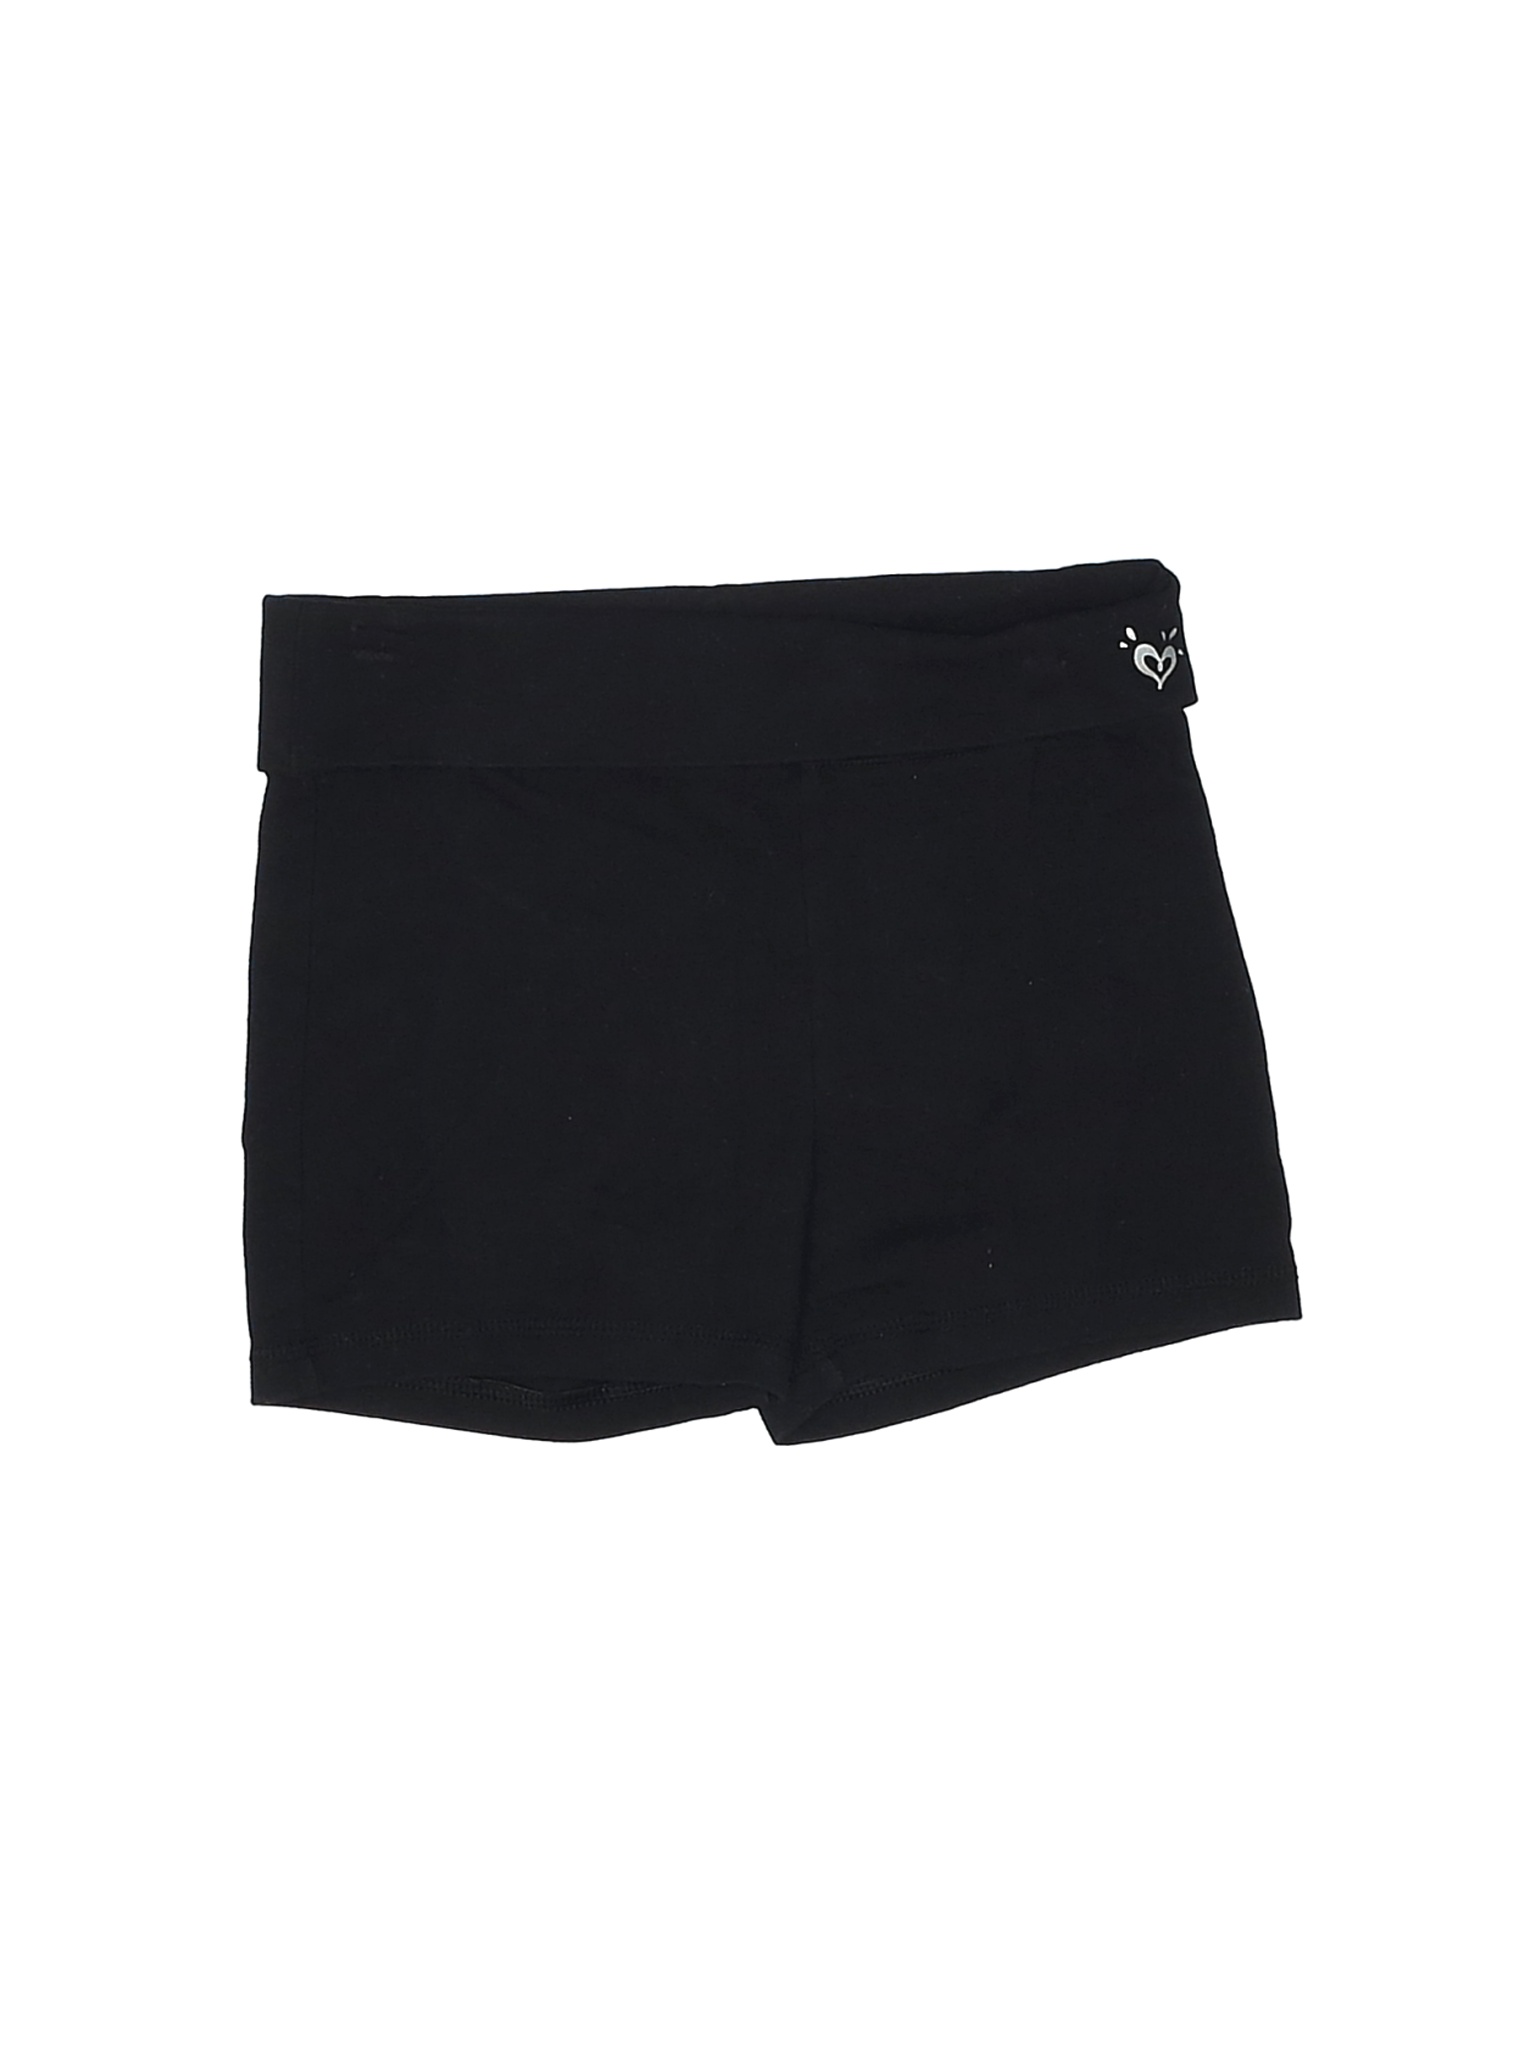 Justice Girls Black Shorts 8 | eBay